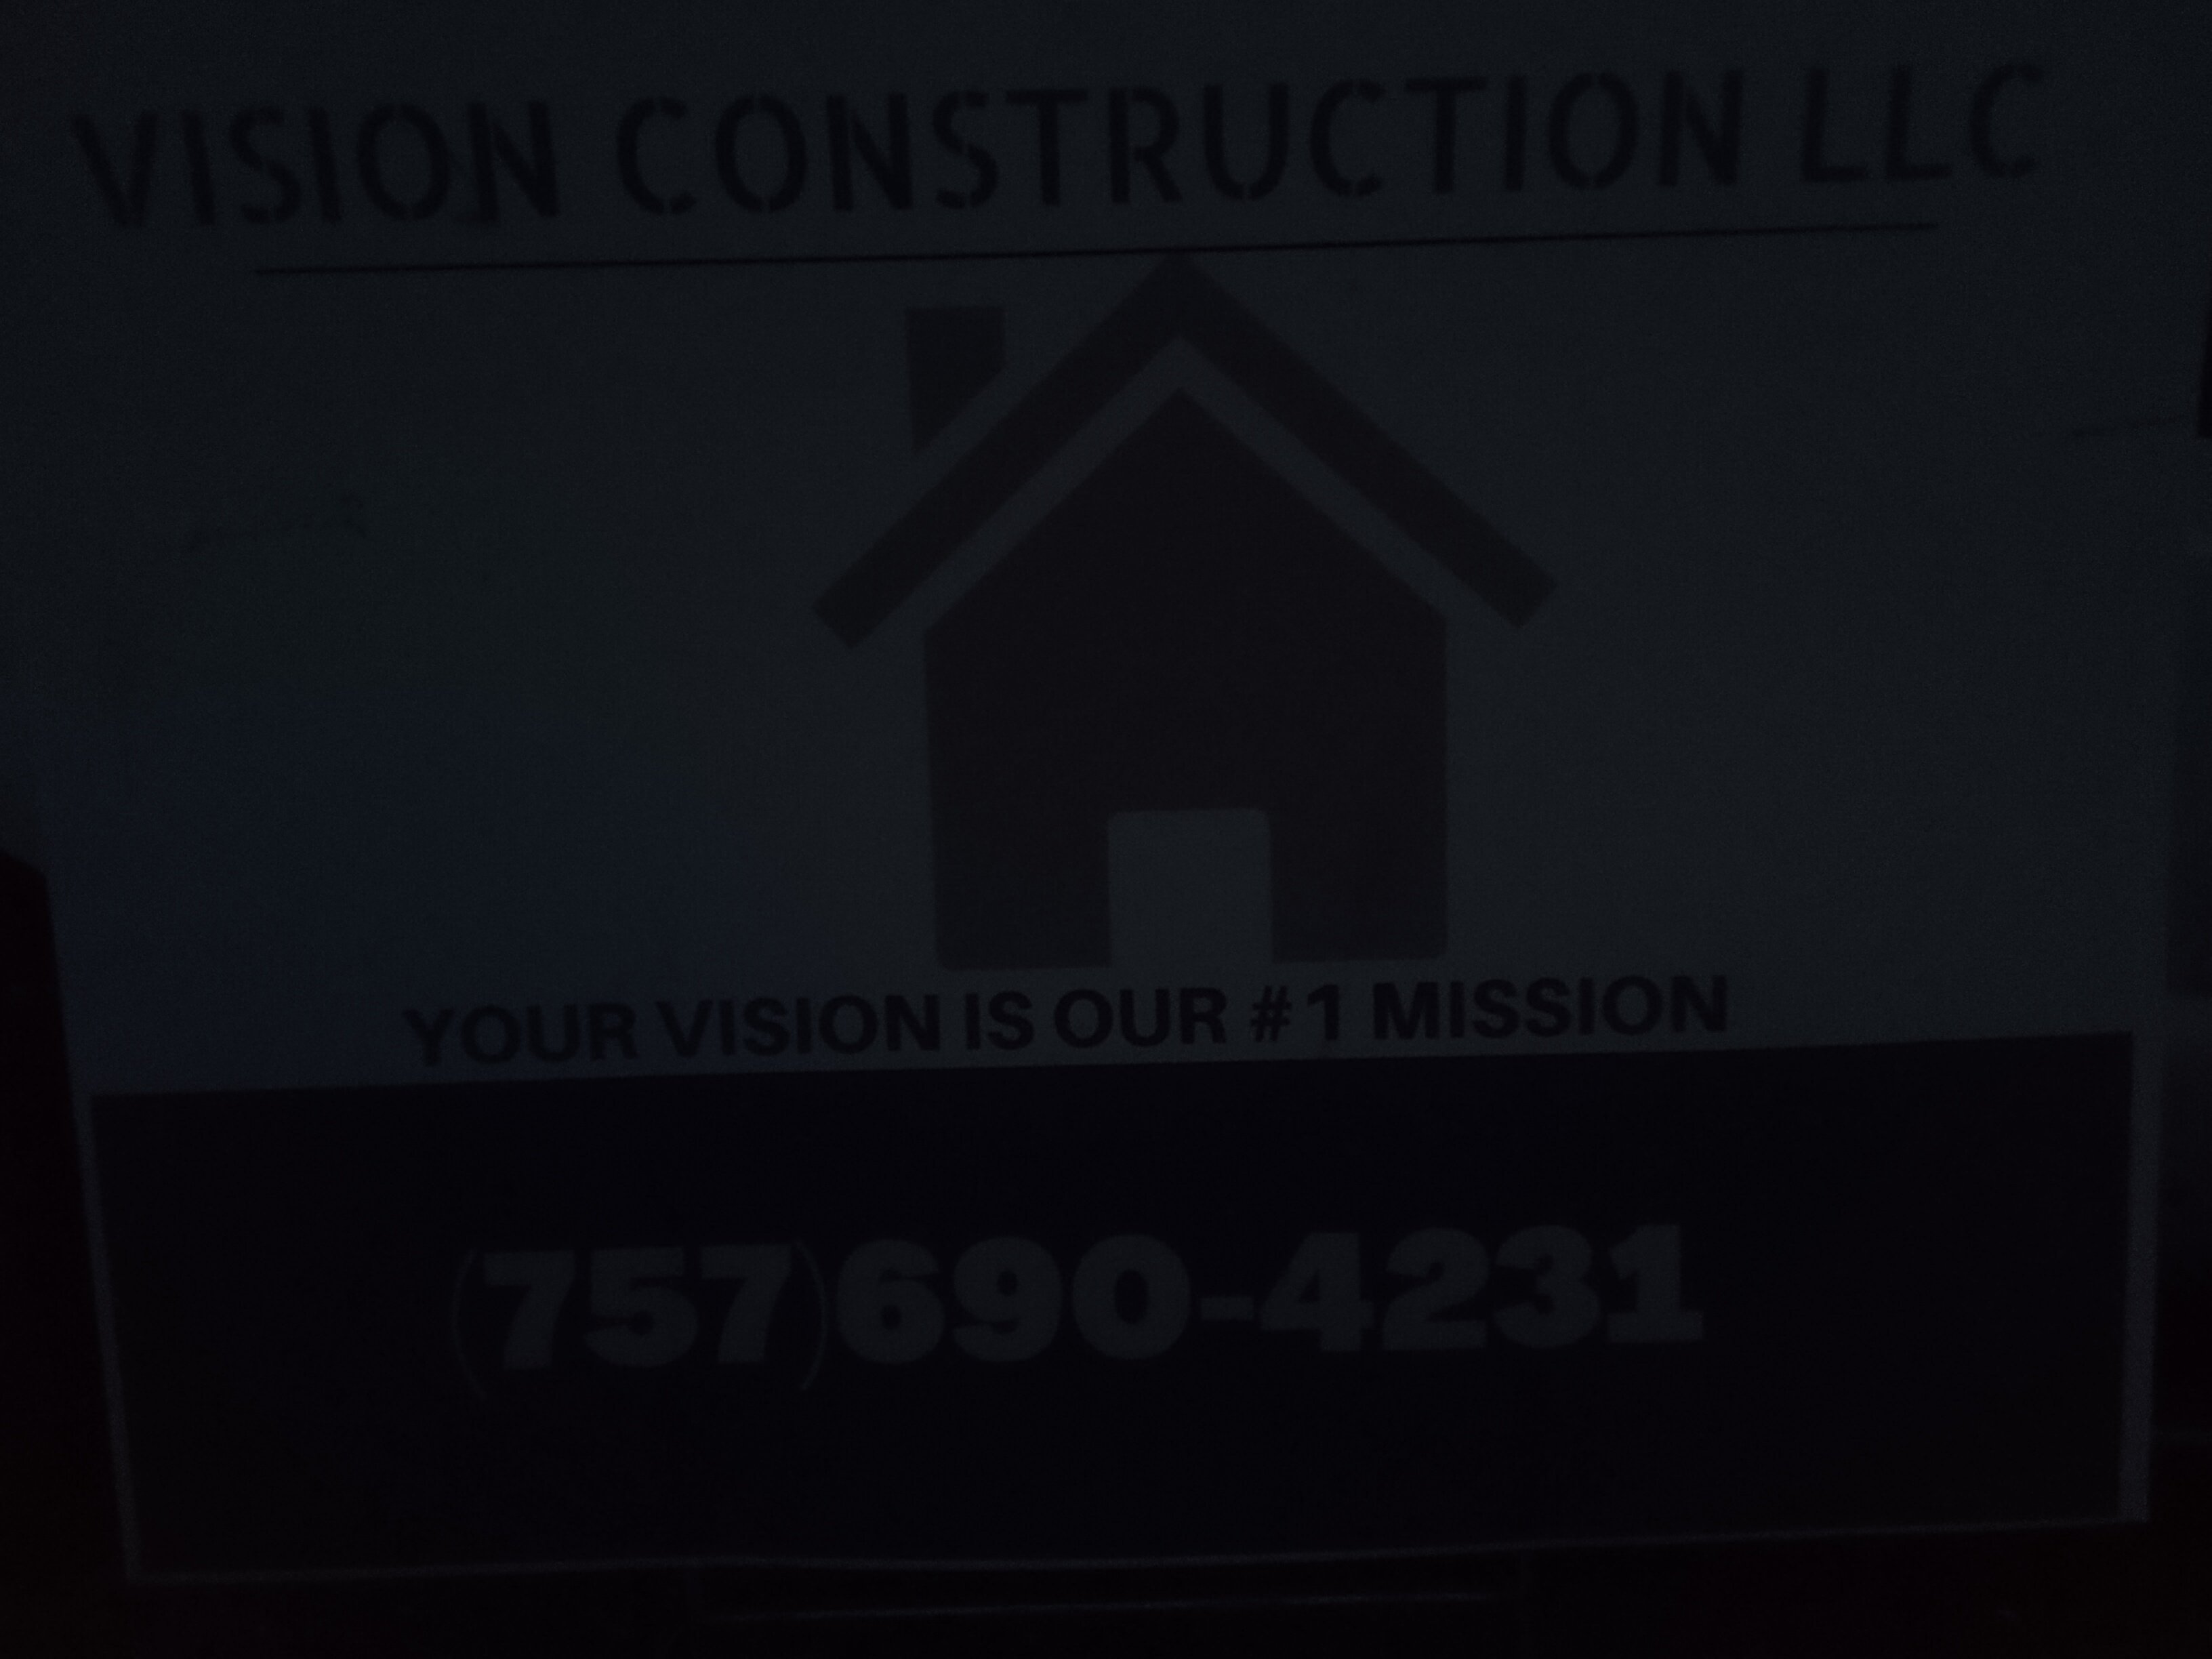 Vision Construction Logo